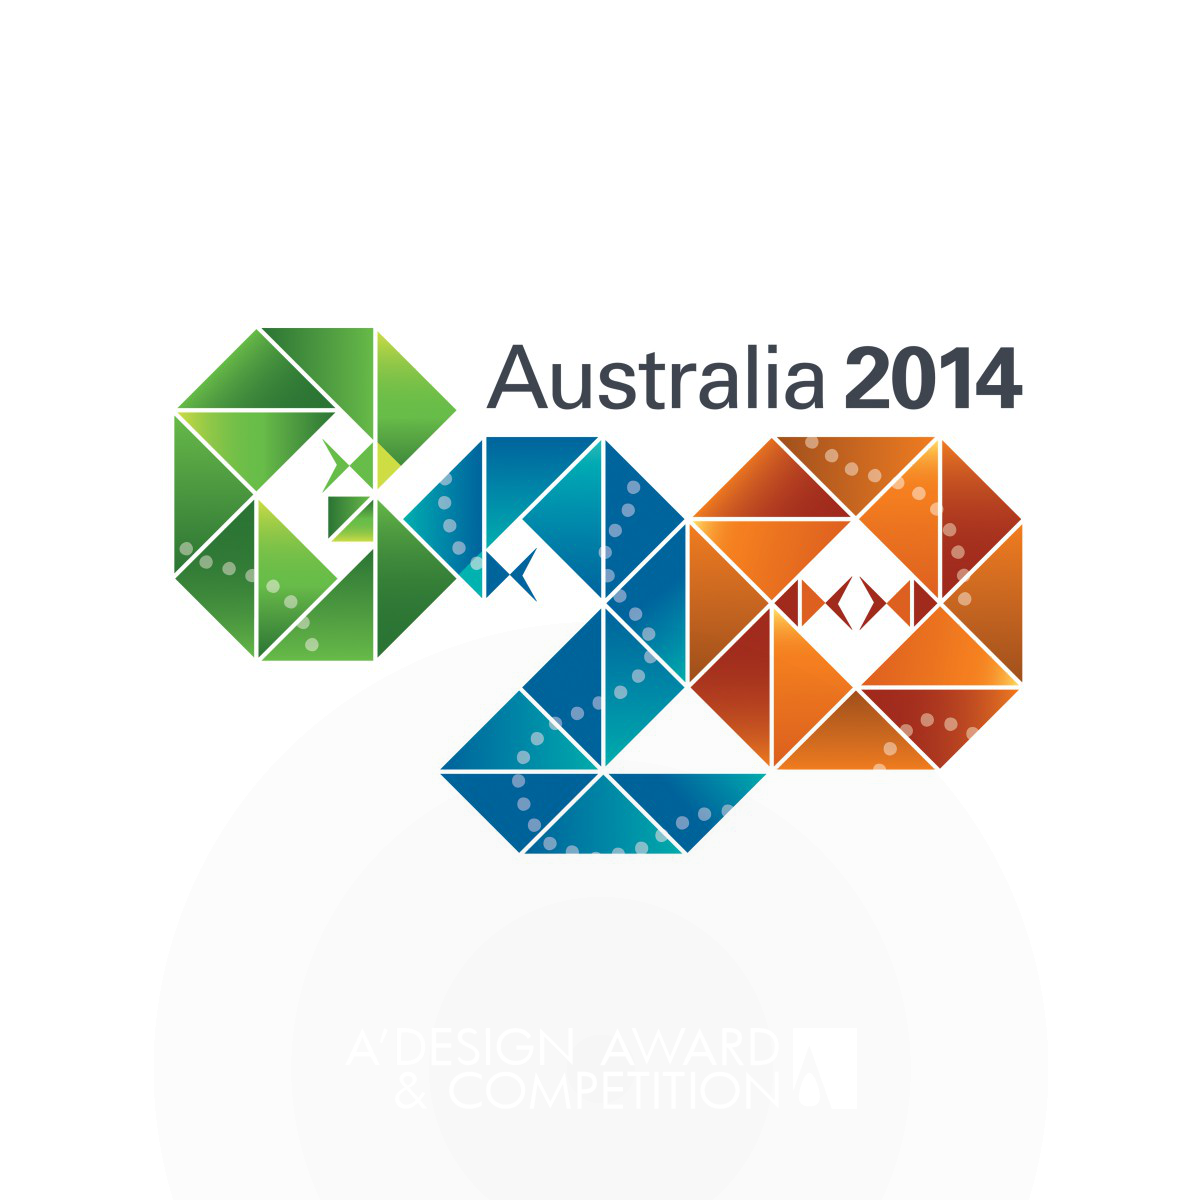 Woven cultures – G20 Australia 2014 <b>Corporate Identity